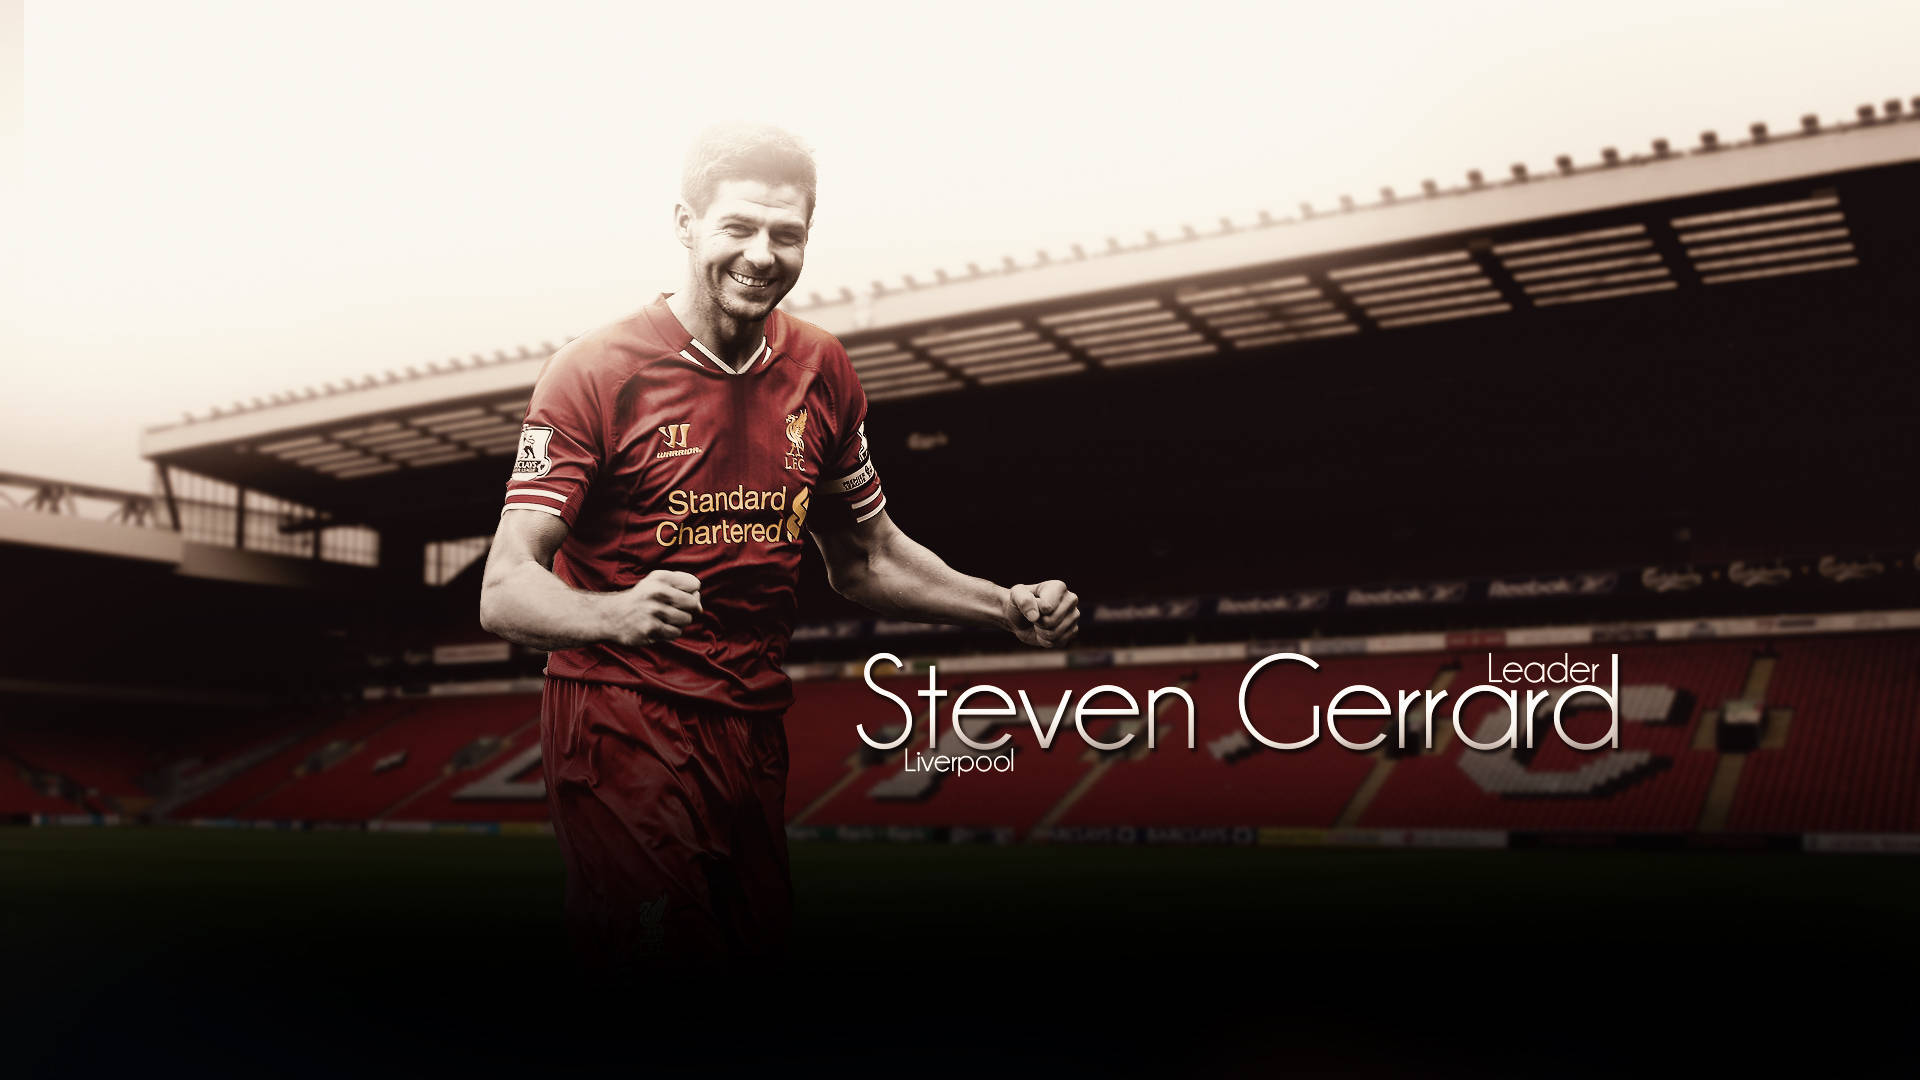 Steven Gerrard Liverpool Leader